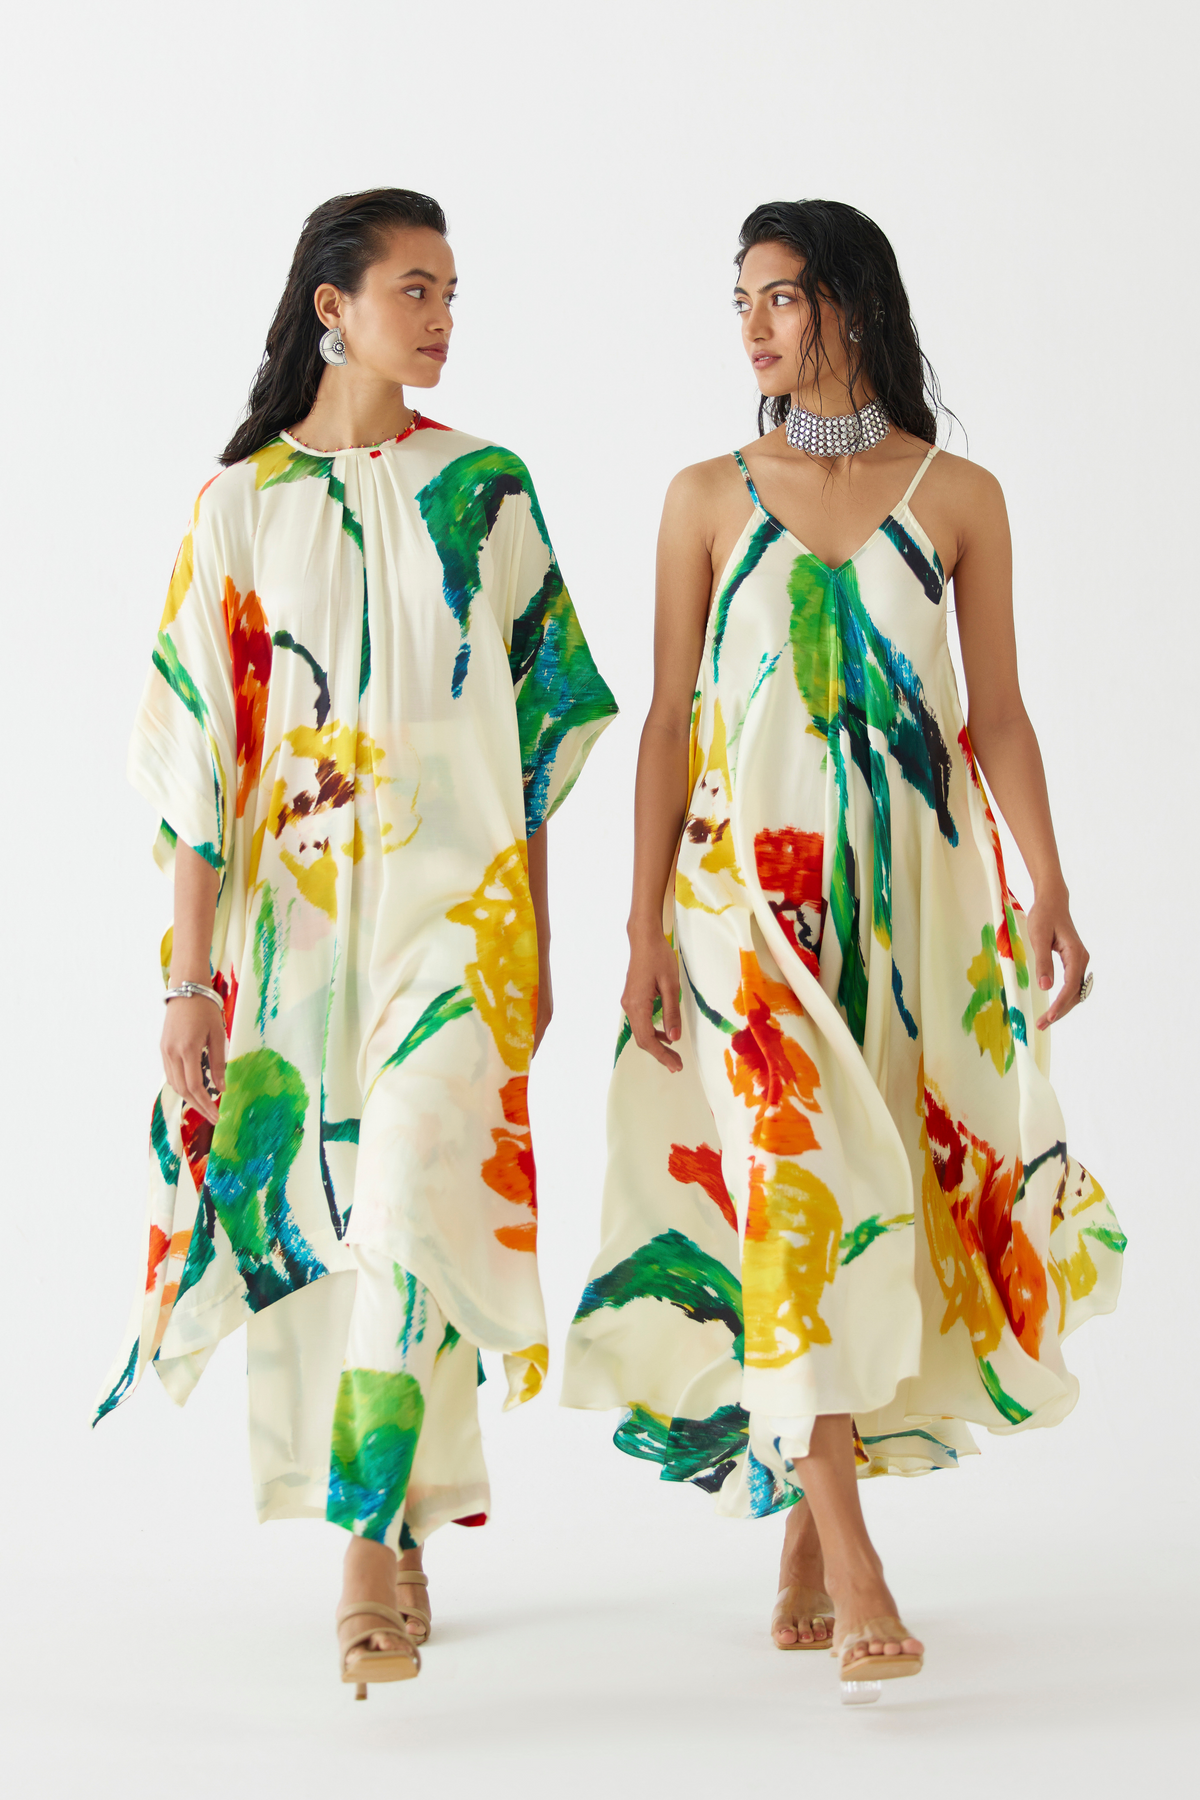 Monet Strappy Dress